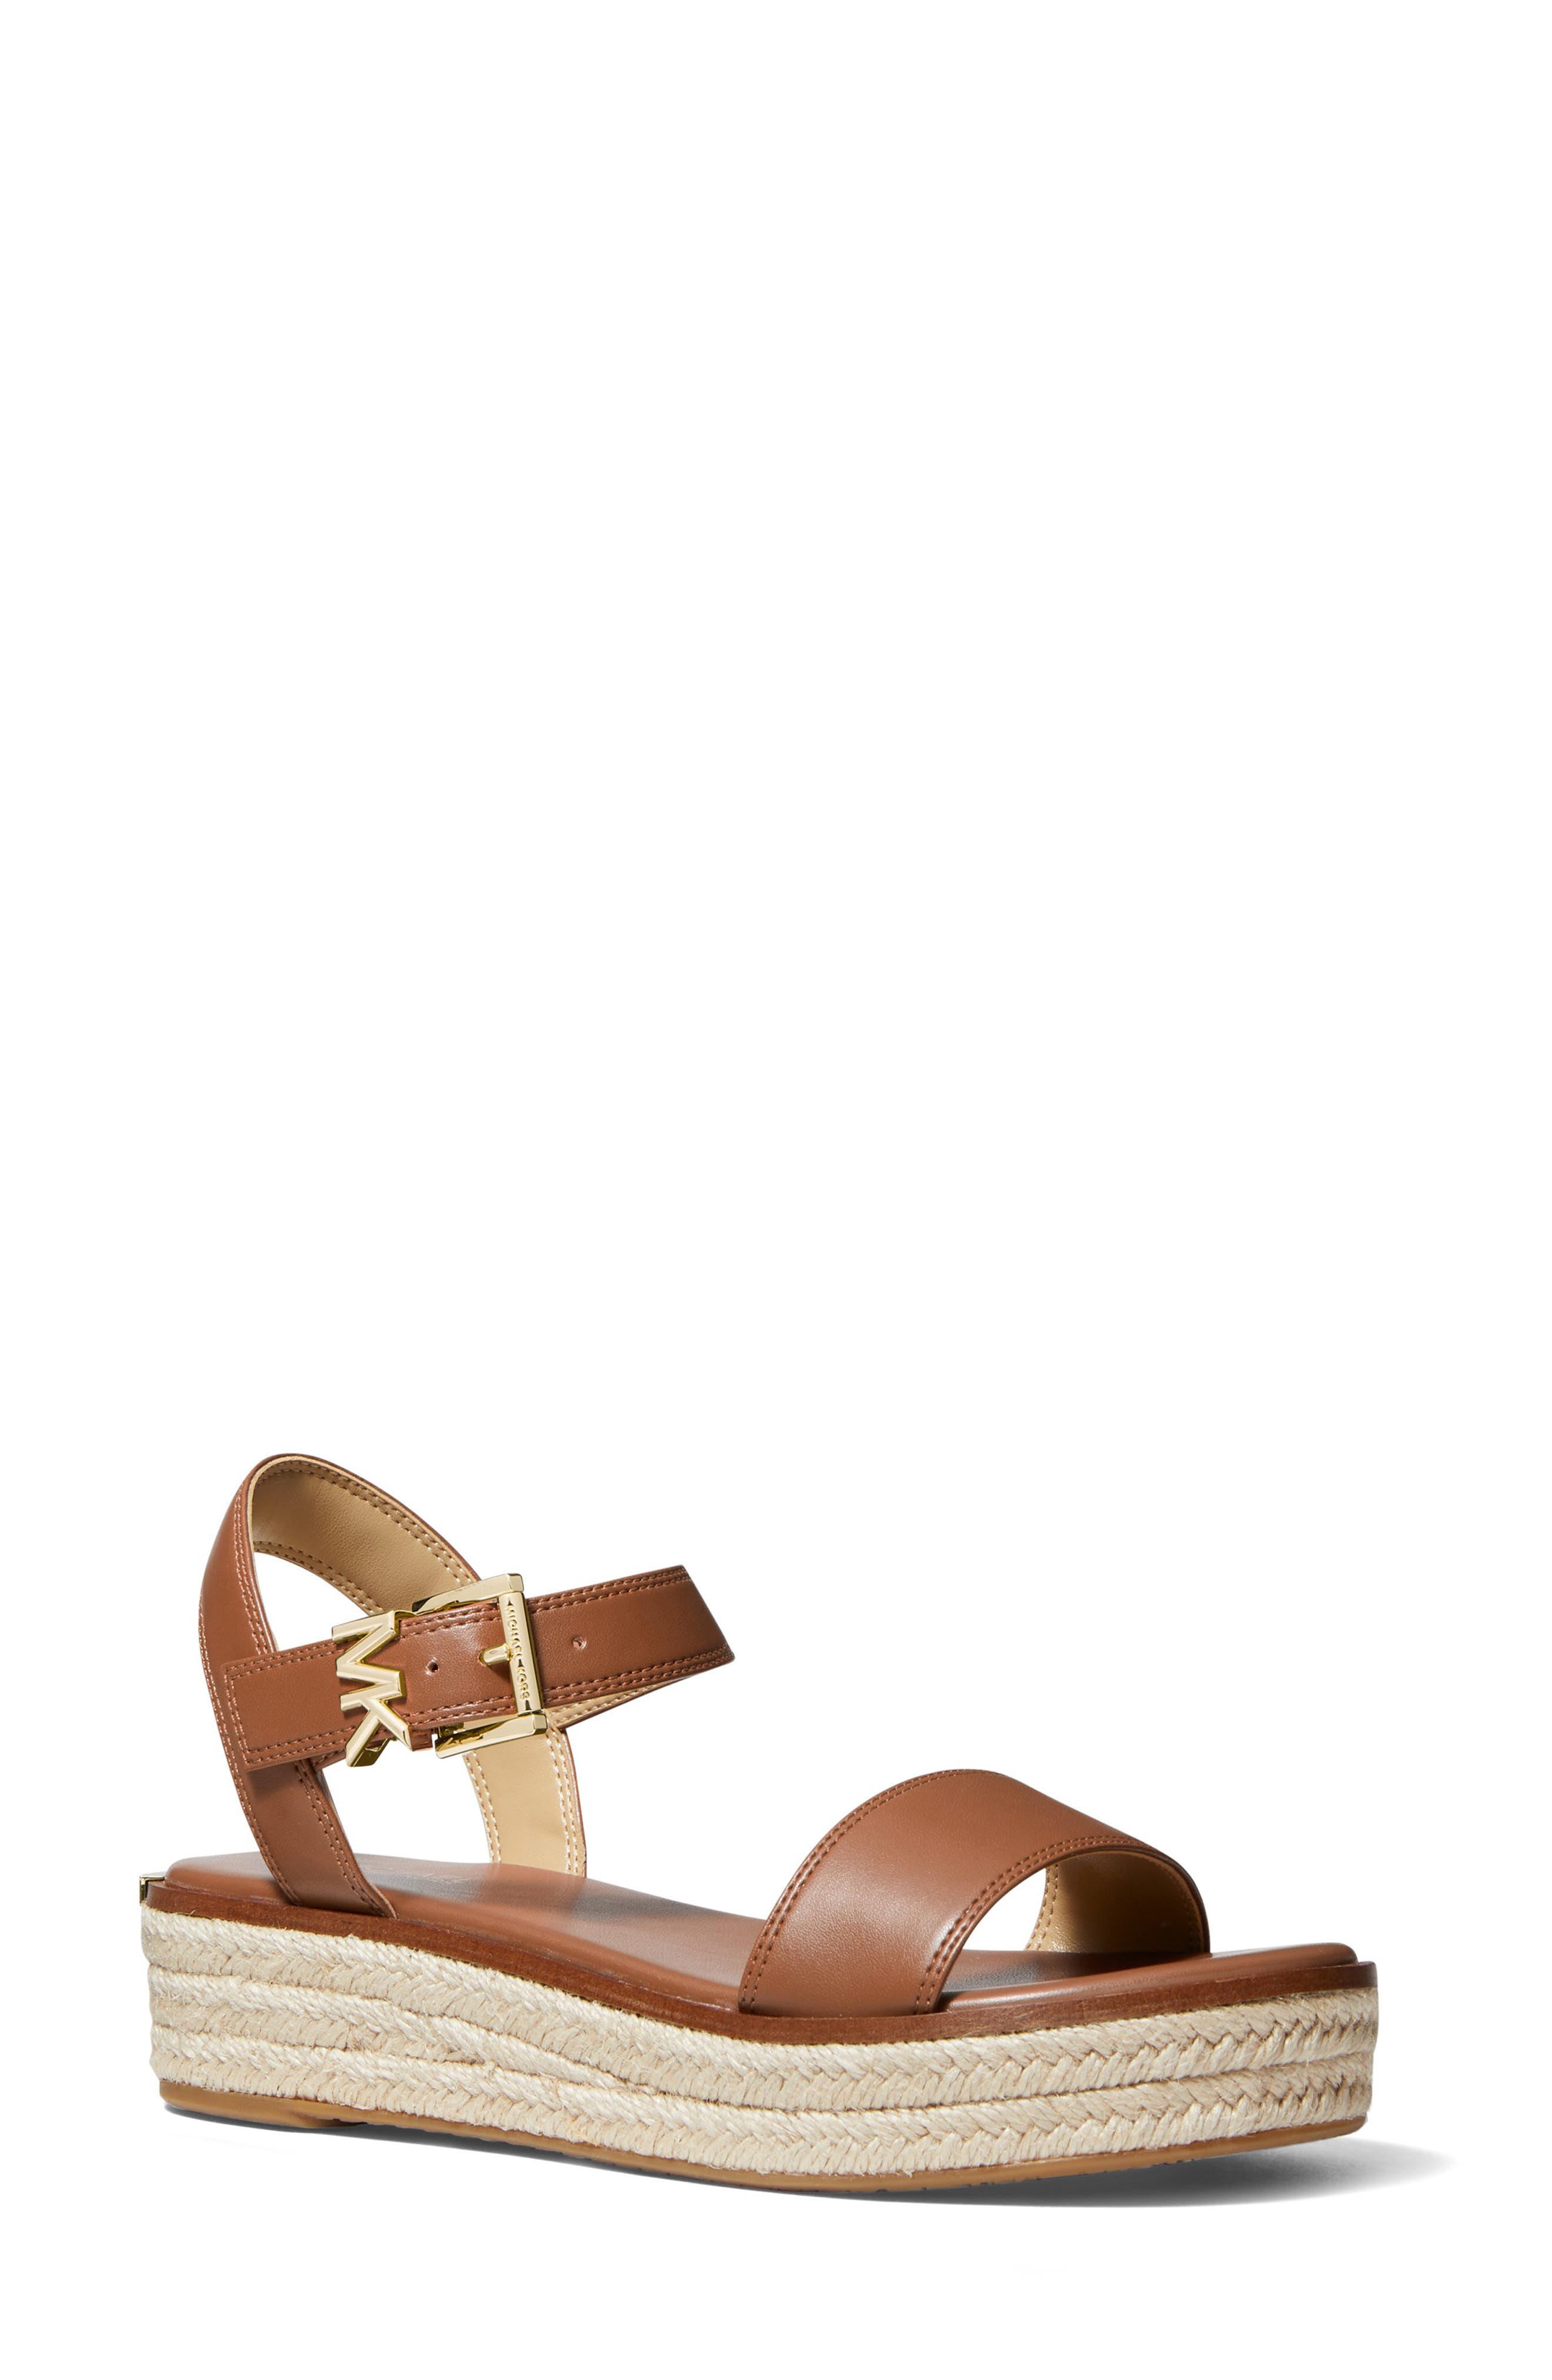 Topshop Espadrille Sandals brown-cream animal pattern extravagant style Shoes Sandals Espadrille Sandals 